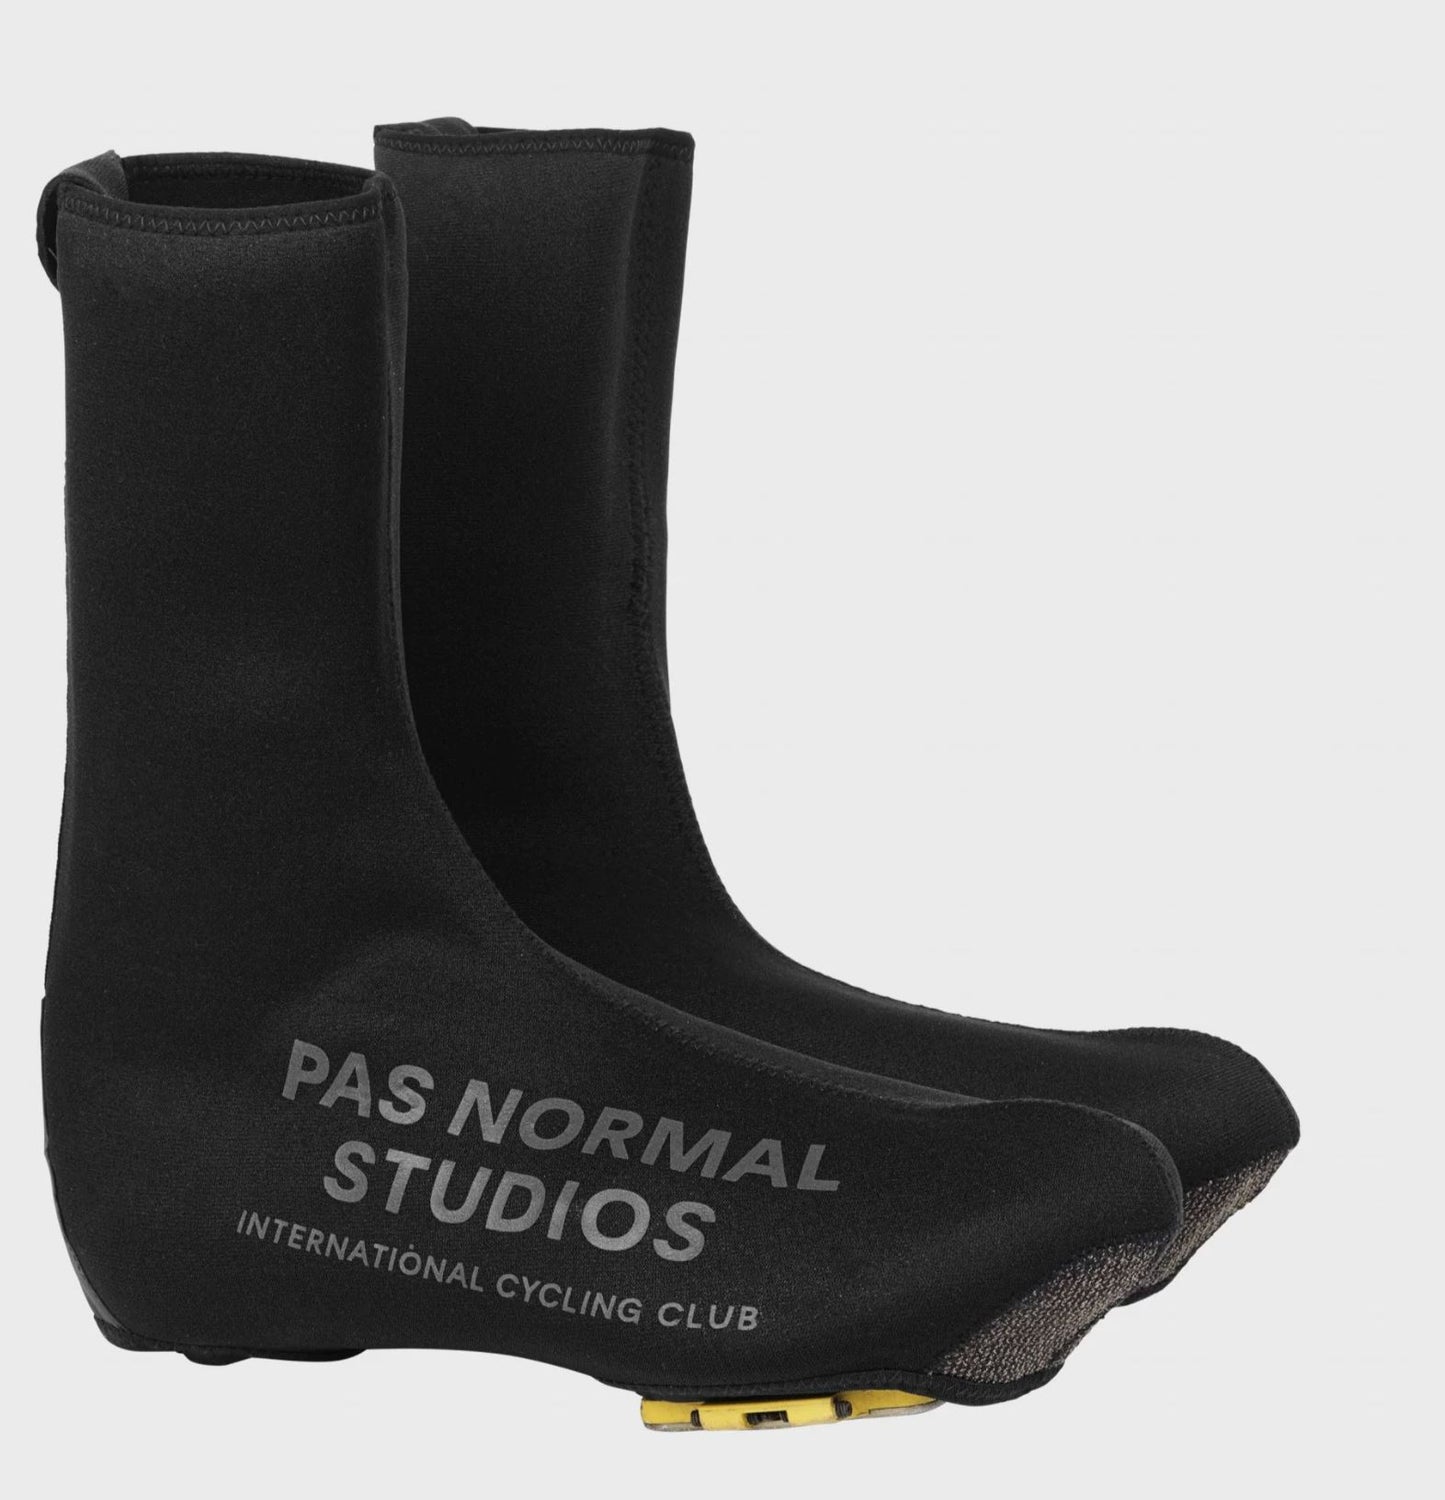 Pas Normal Studios - Couvre-Chaussures Heavy Warmers Pas Normal Studios Noir S 